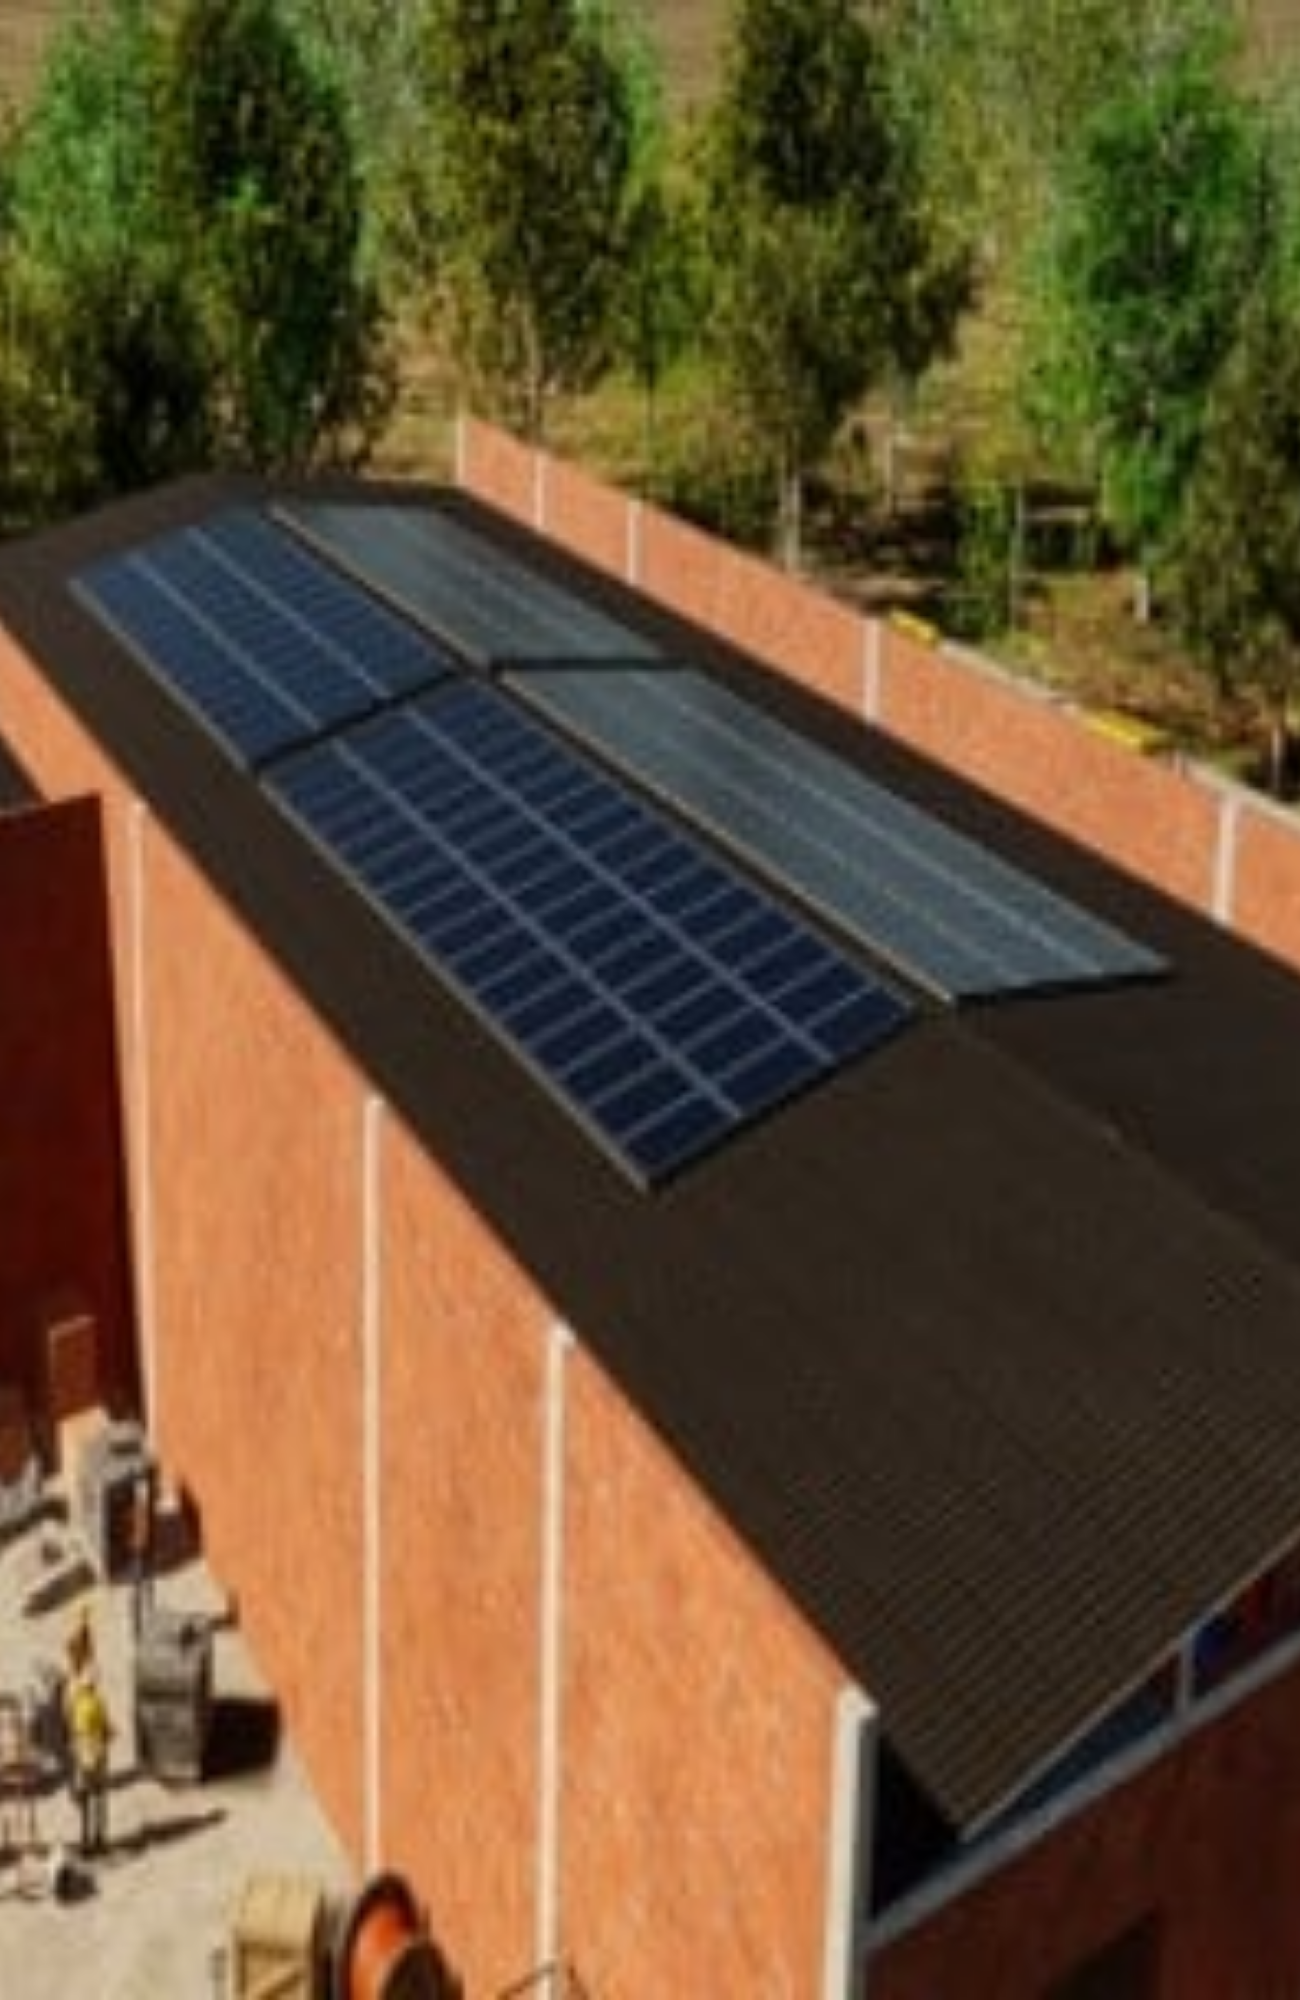 empresa de energia solar em sp (5)